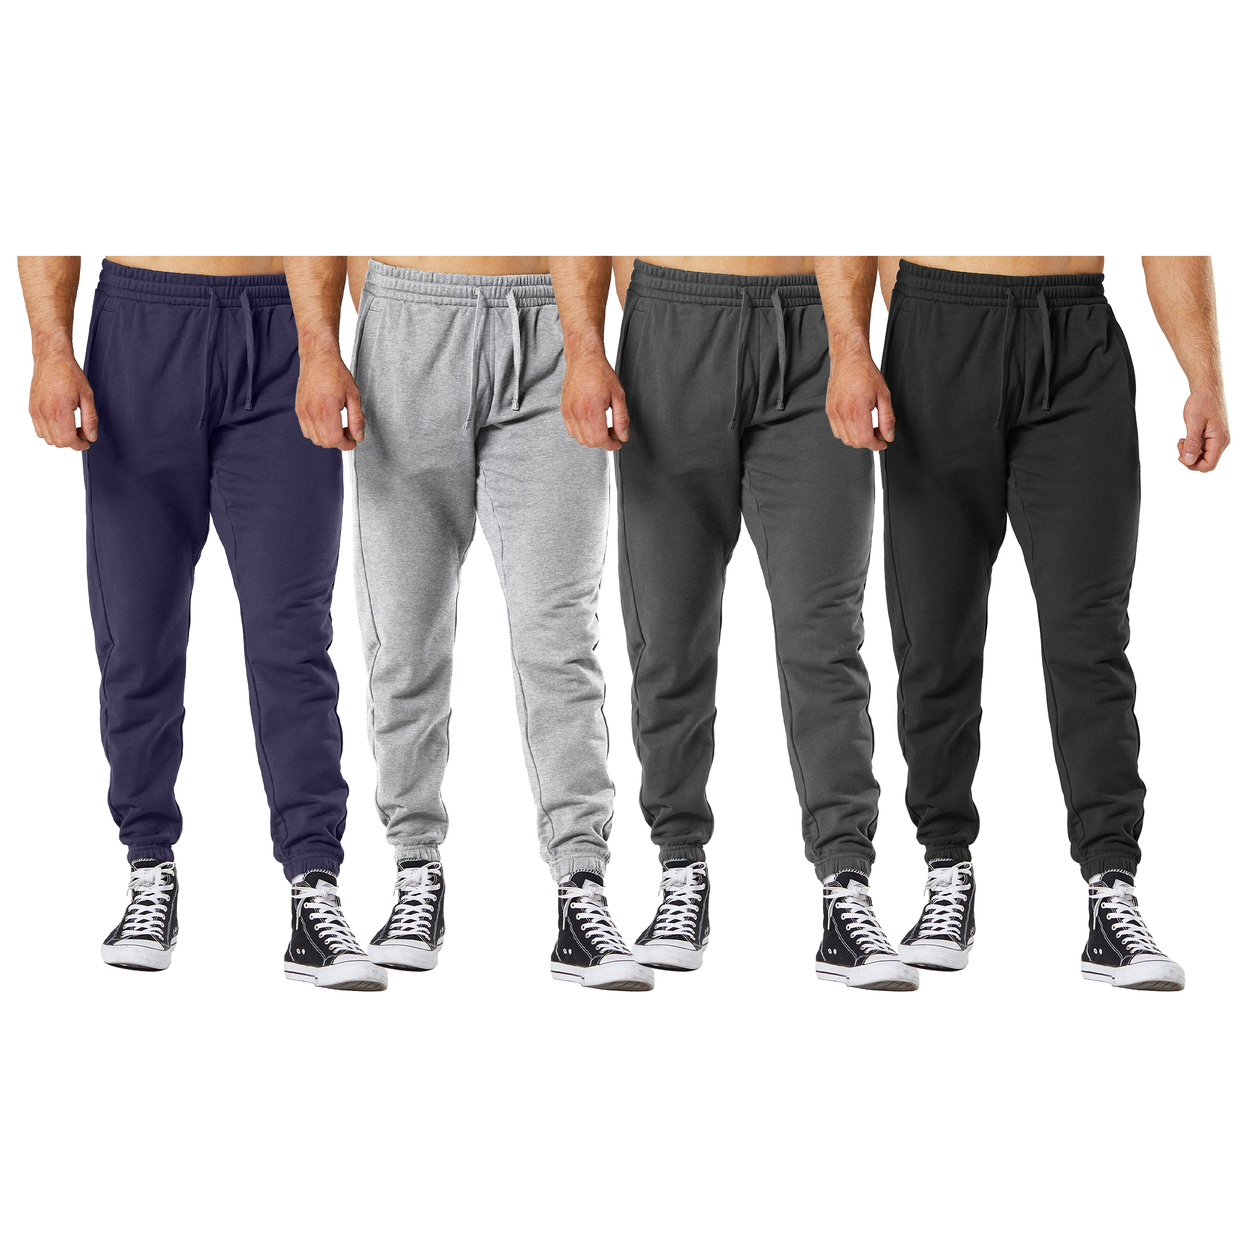 Men's Ultra-Soft Cozy Winter Warm Casual Fleece Lined Sweatpants Jogger - Charcoal, X-large